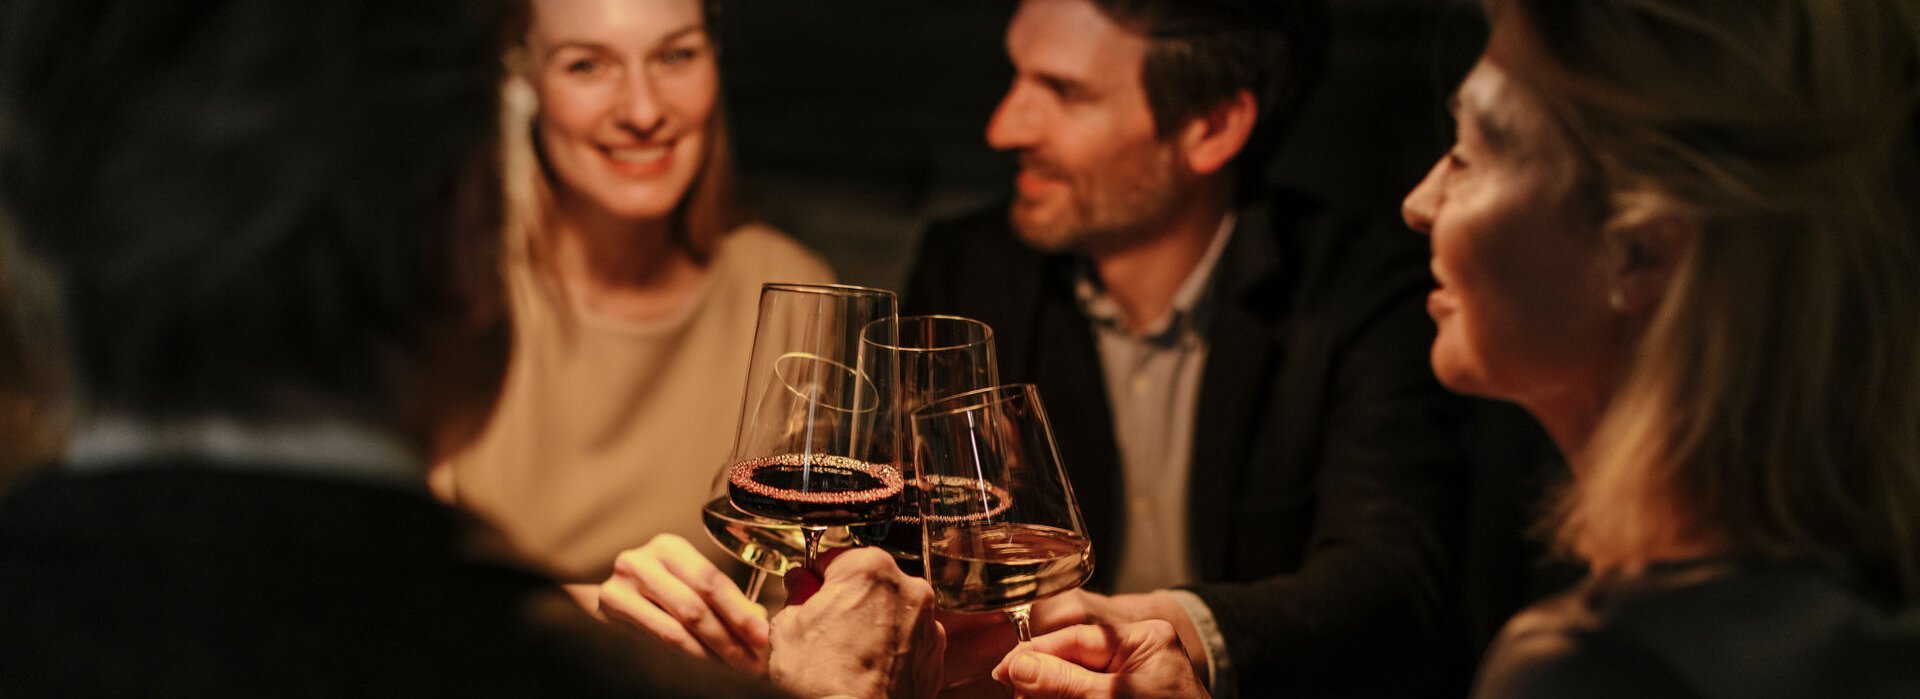 Group enjoying a glass of wine